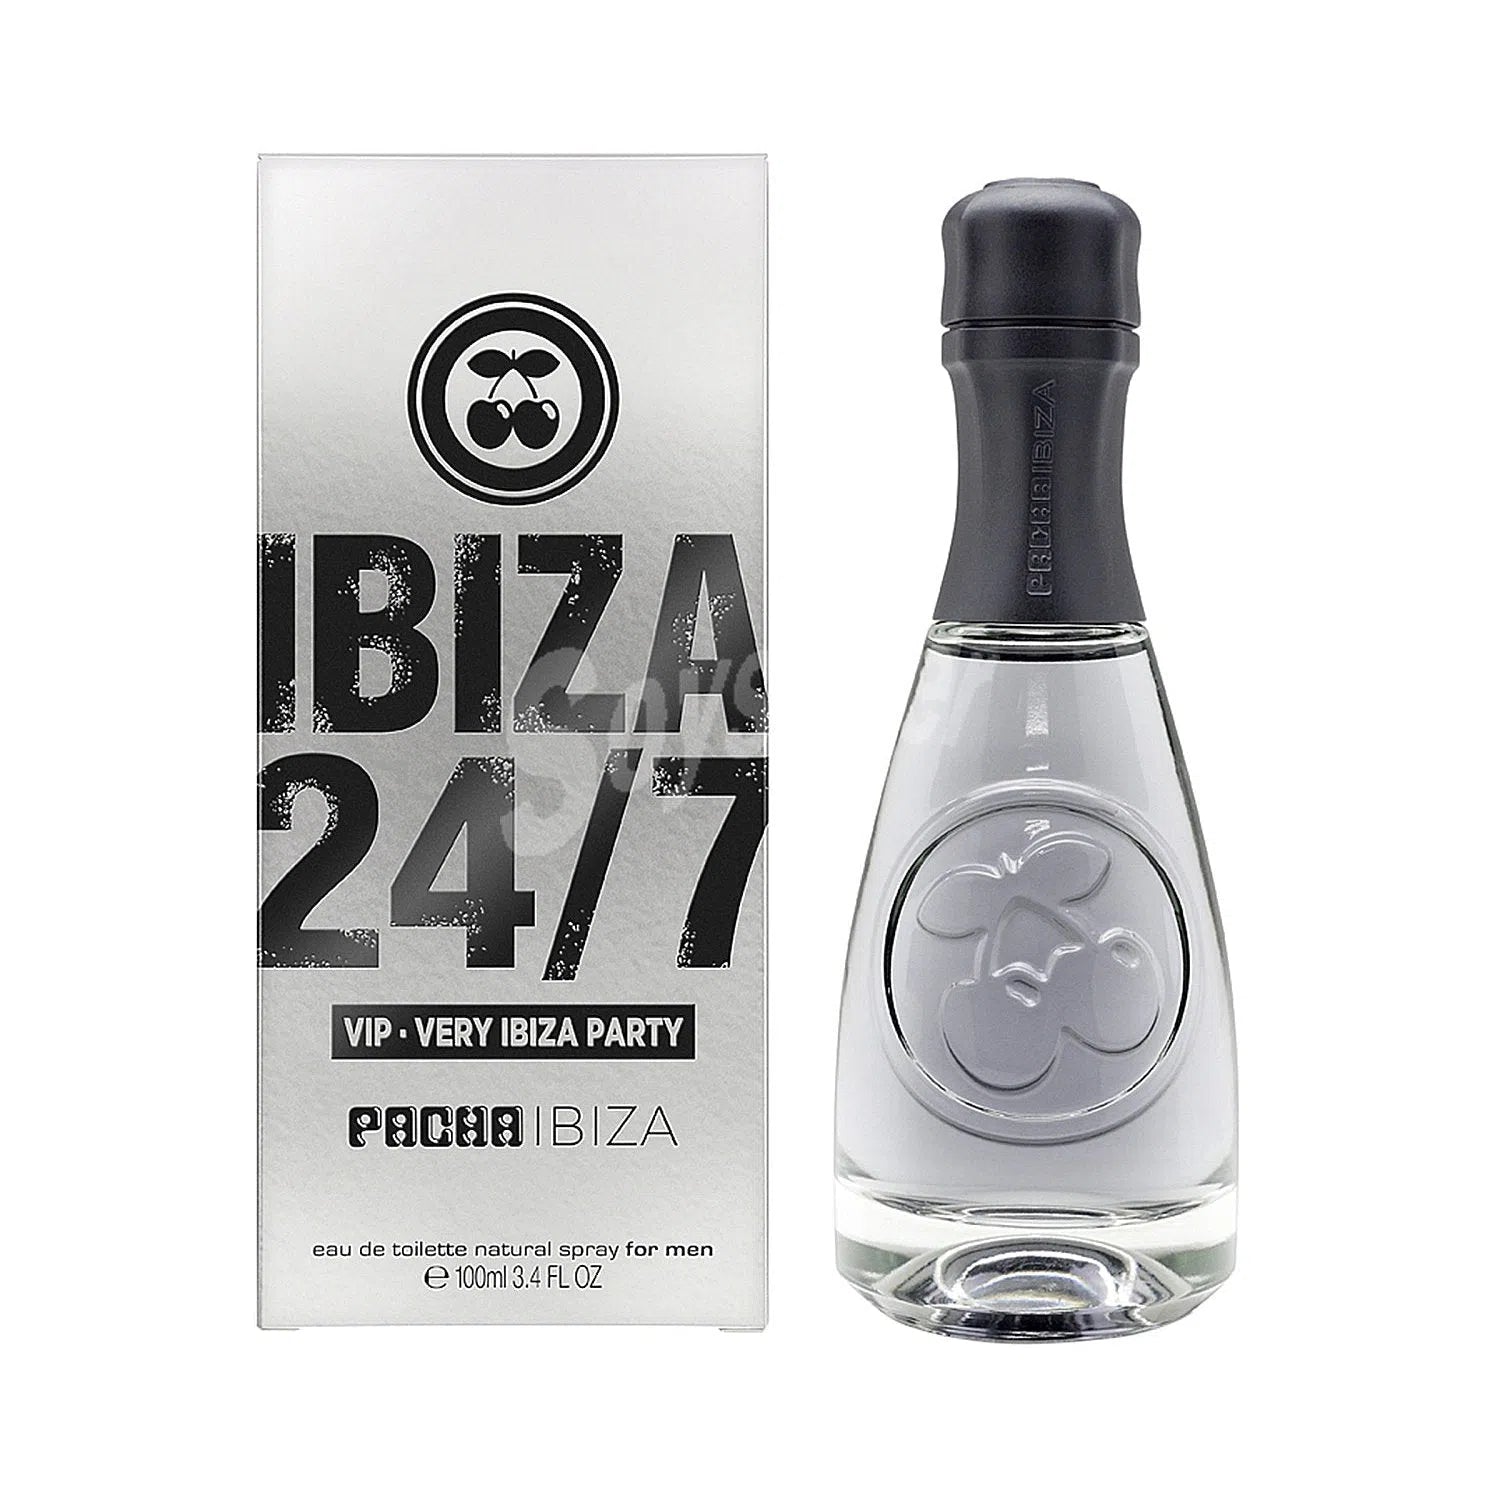 Perfume Pacha Ibiza 24-7 Very Ibiza Party Him EDT (M) / 100 ml - 8411061011904- Prive Perfumes Honduras